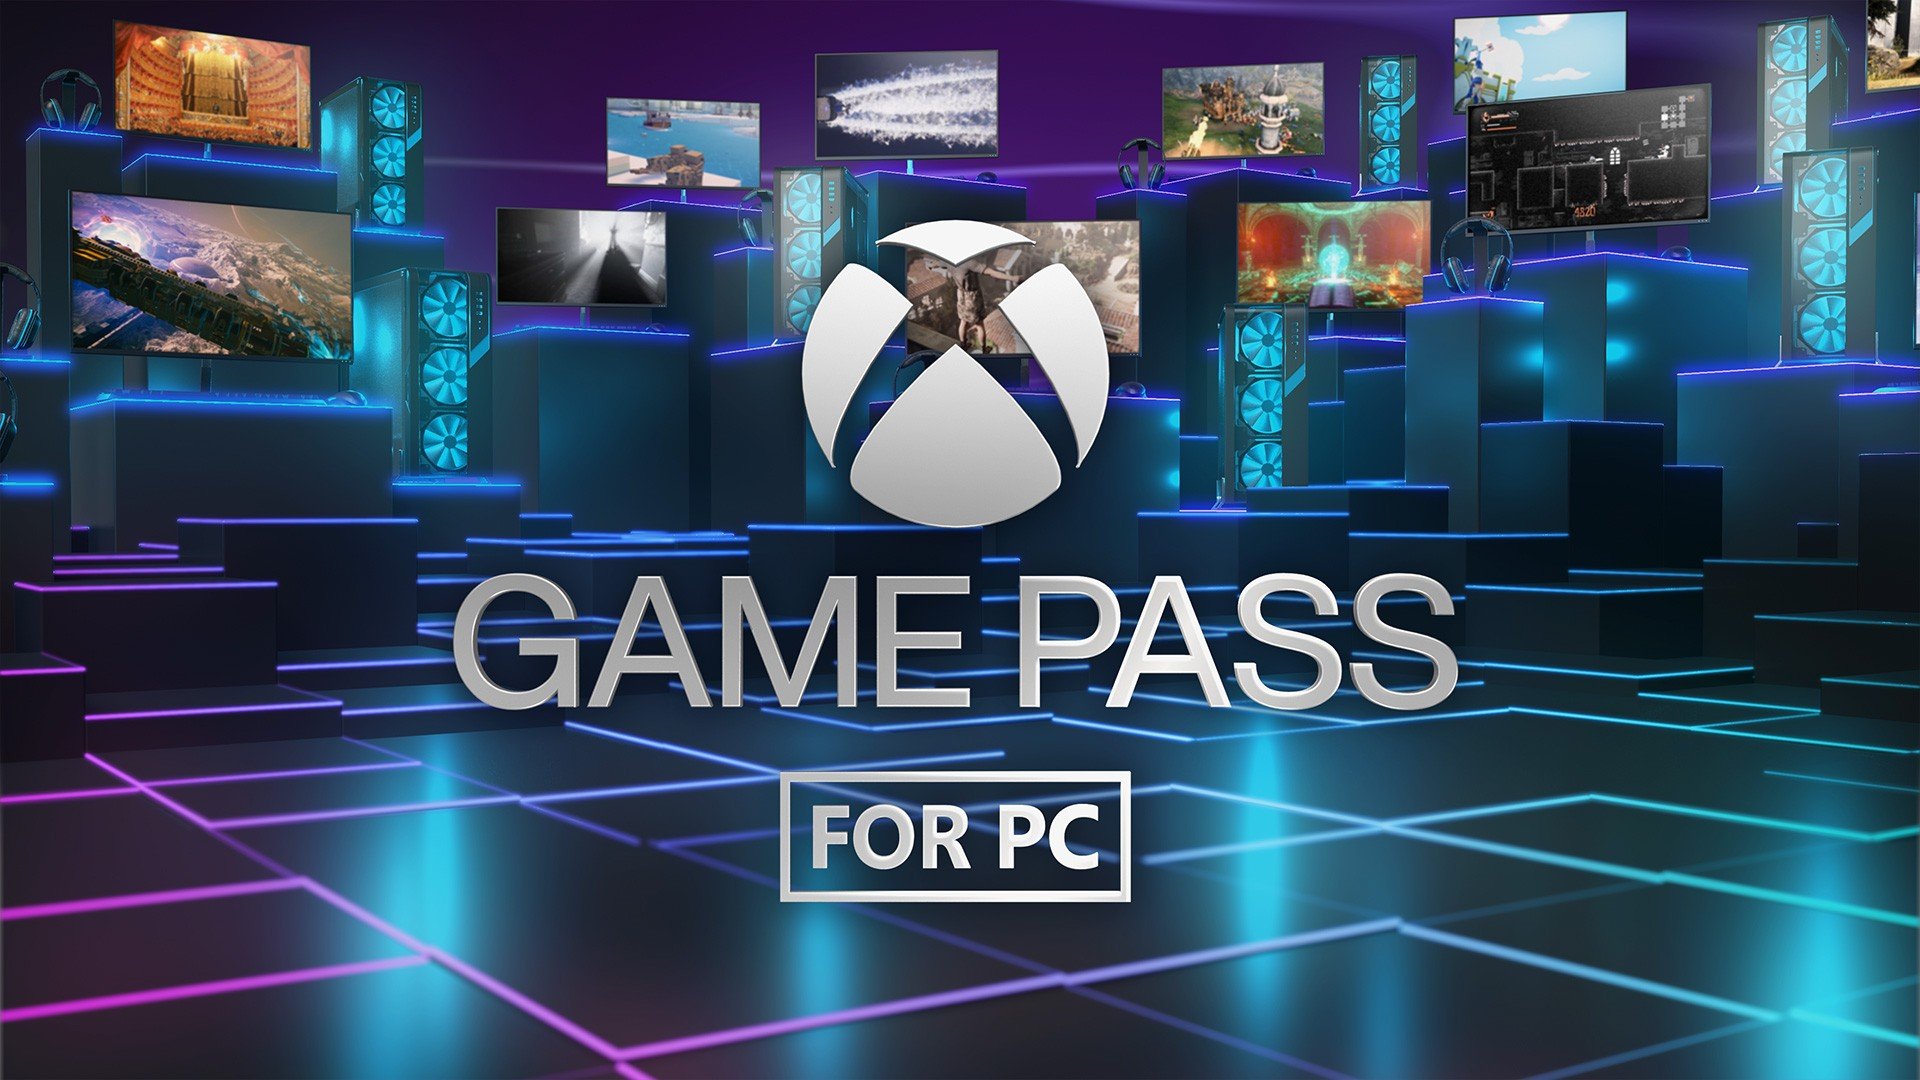 Free 1 Month Of Pc Gamepass Wont Claim. - Microsoft Community